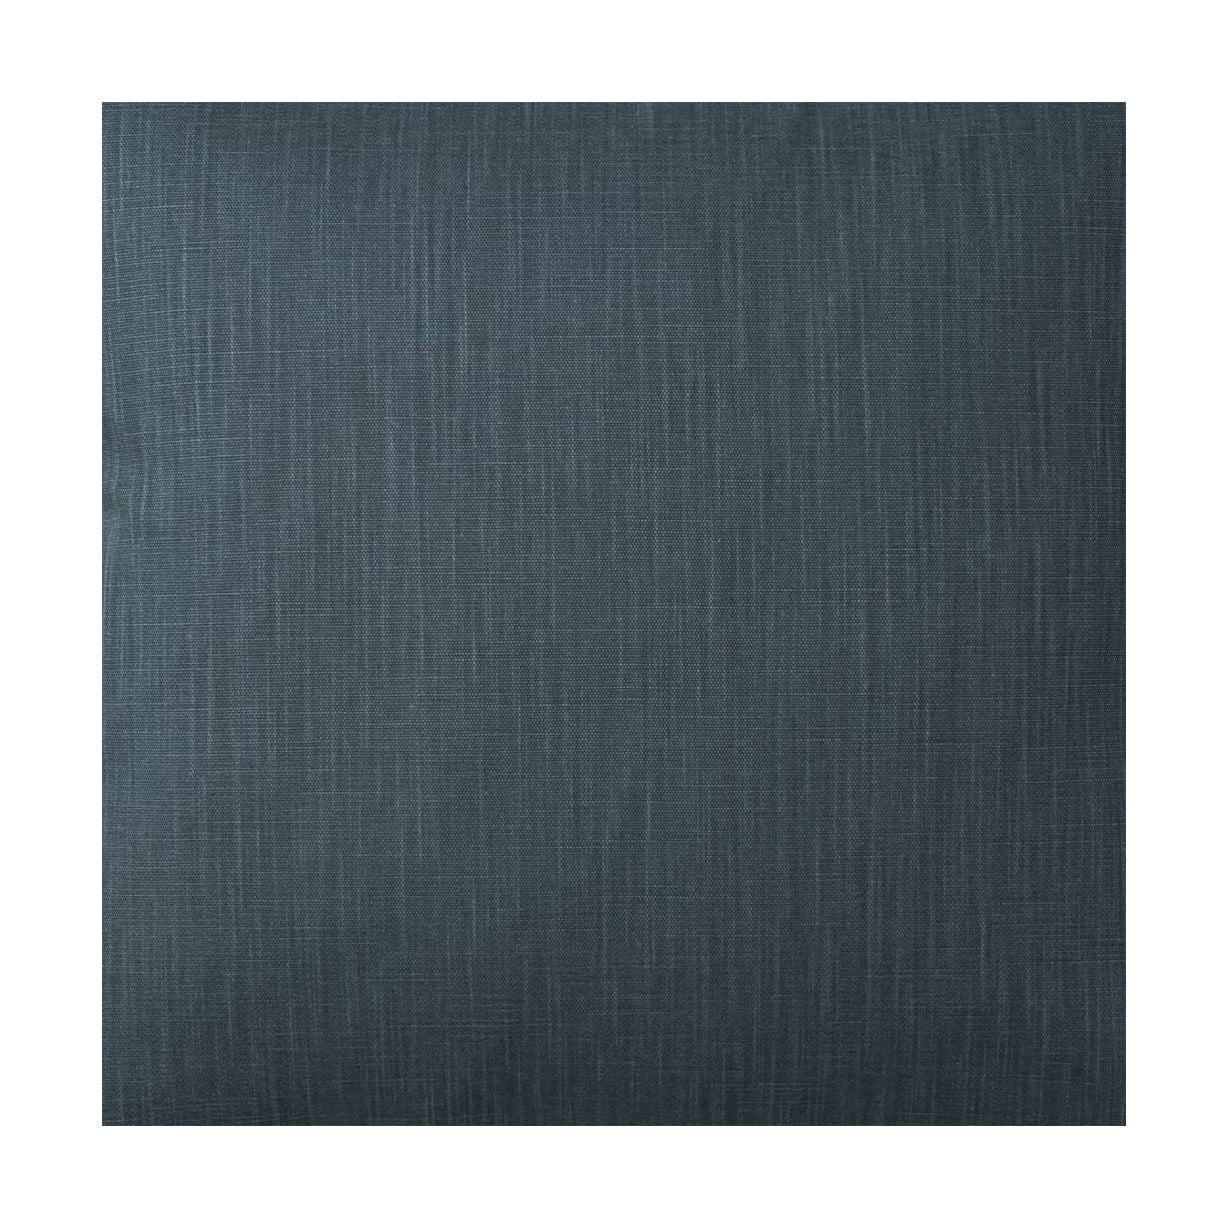 Spira Klotz -stofbreedte 150 cm (prijs per meter), stoffig blauw